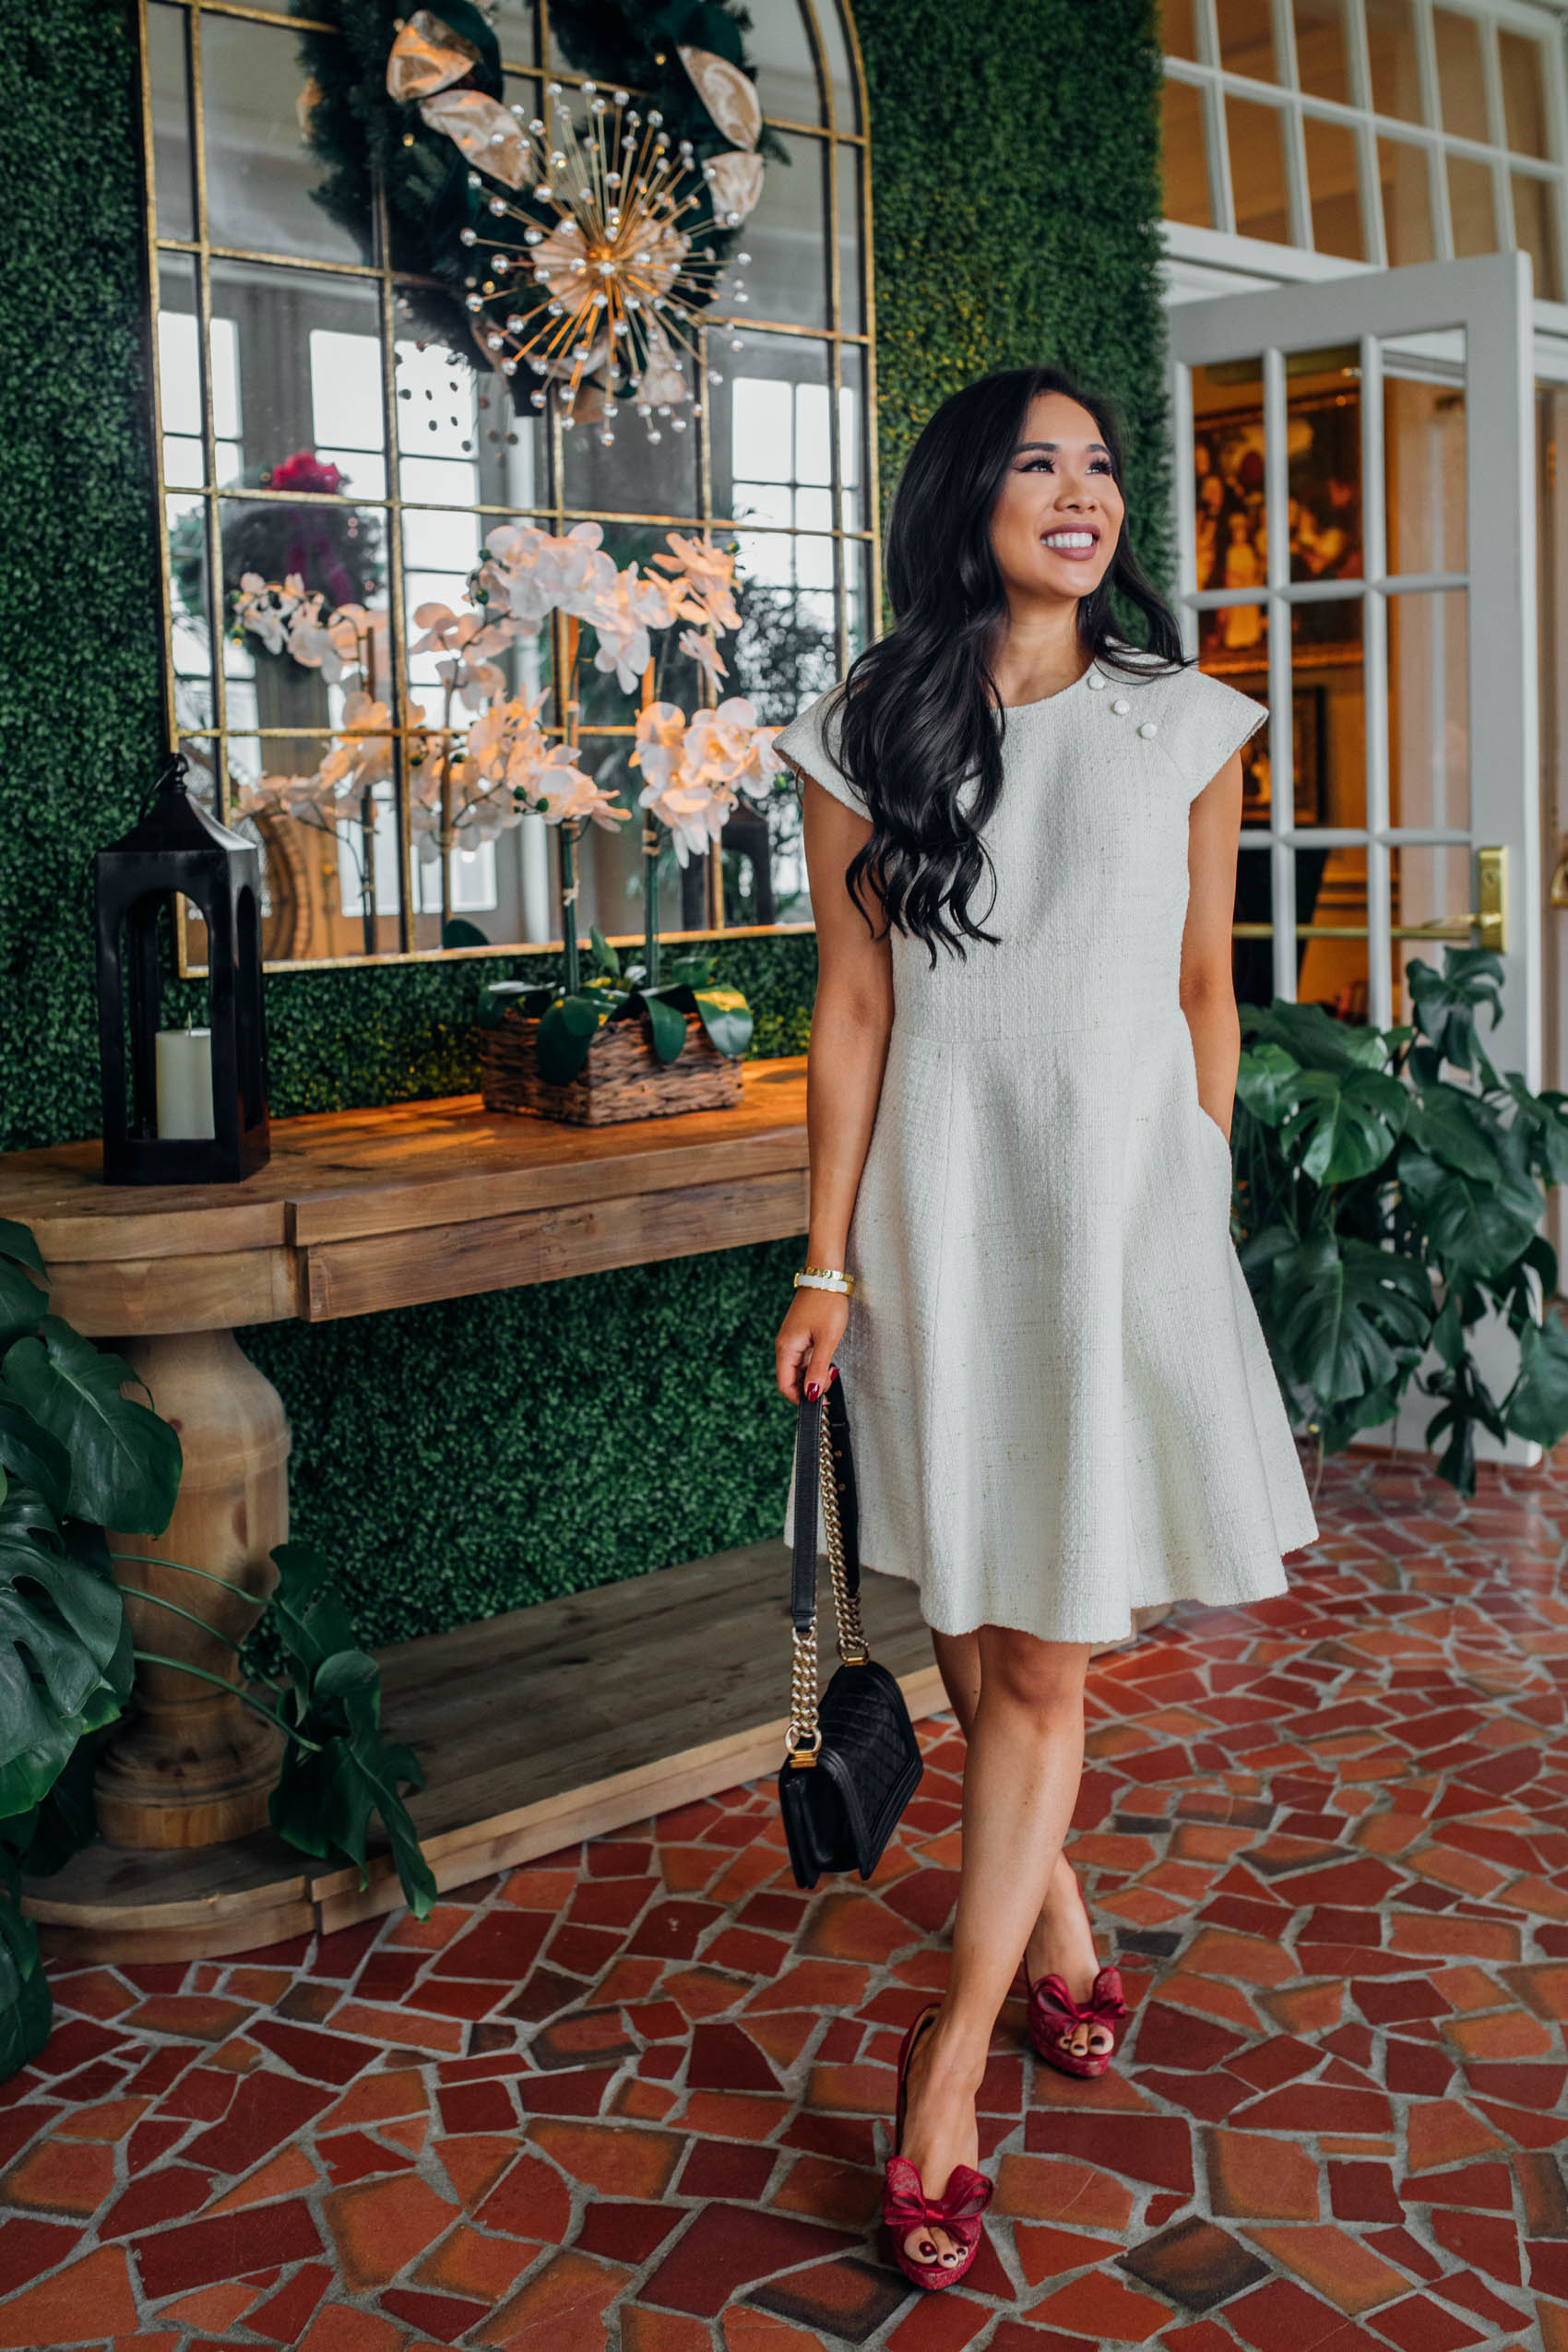 Blogger Hoang-Kim shares a Christmas outfit idea